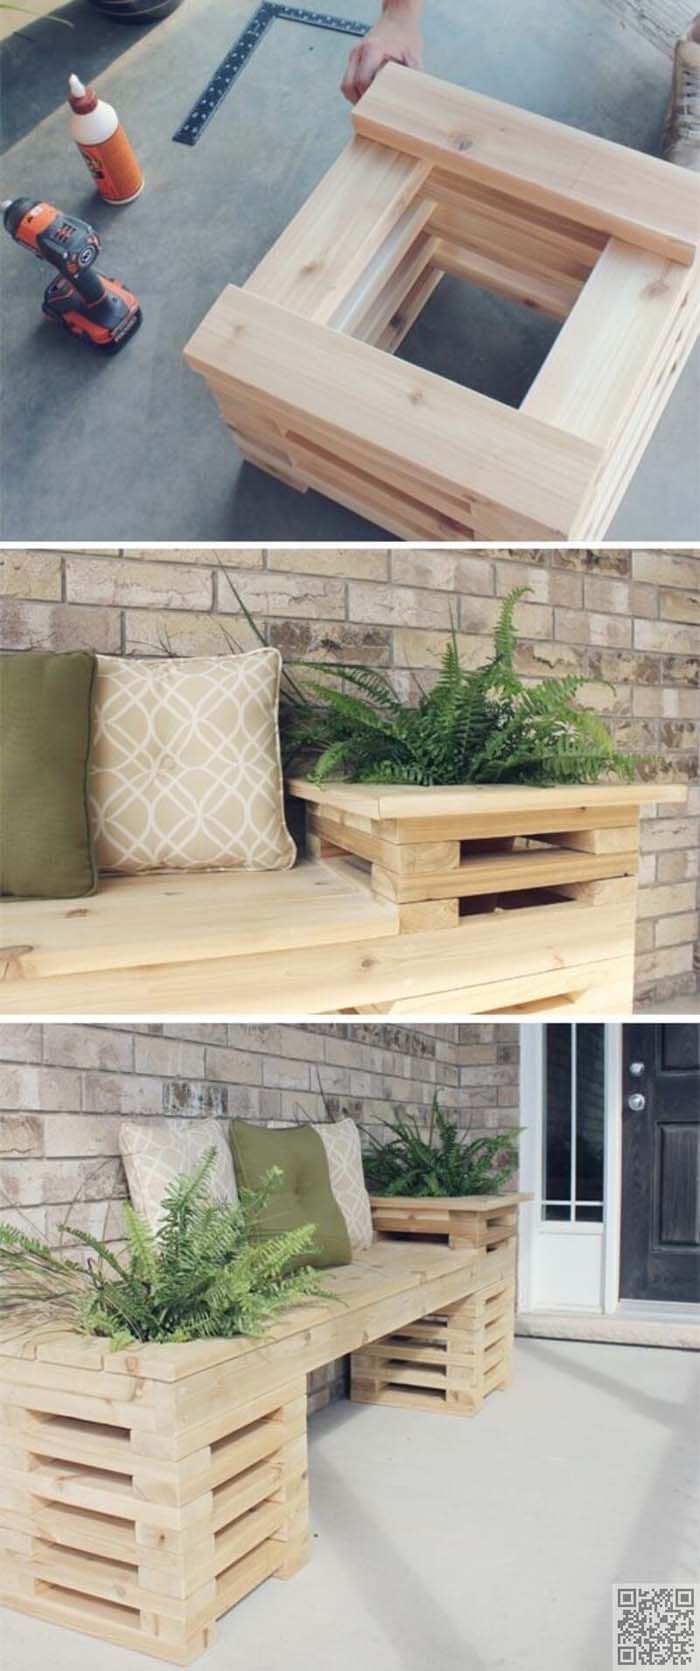 DIY Wood Bench with Planters #diy #planter #garden #decorhomeideas